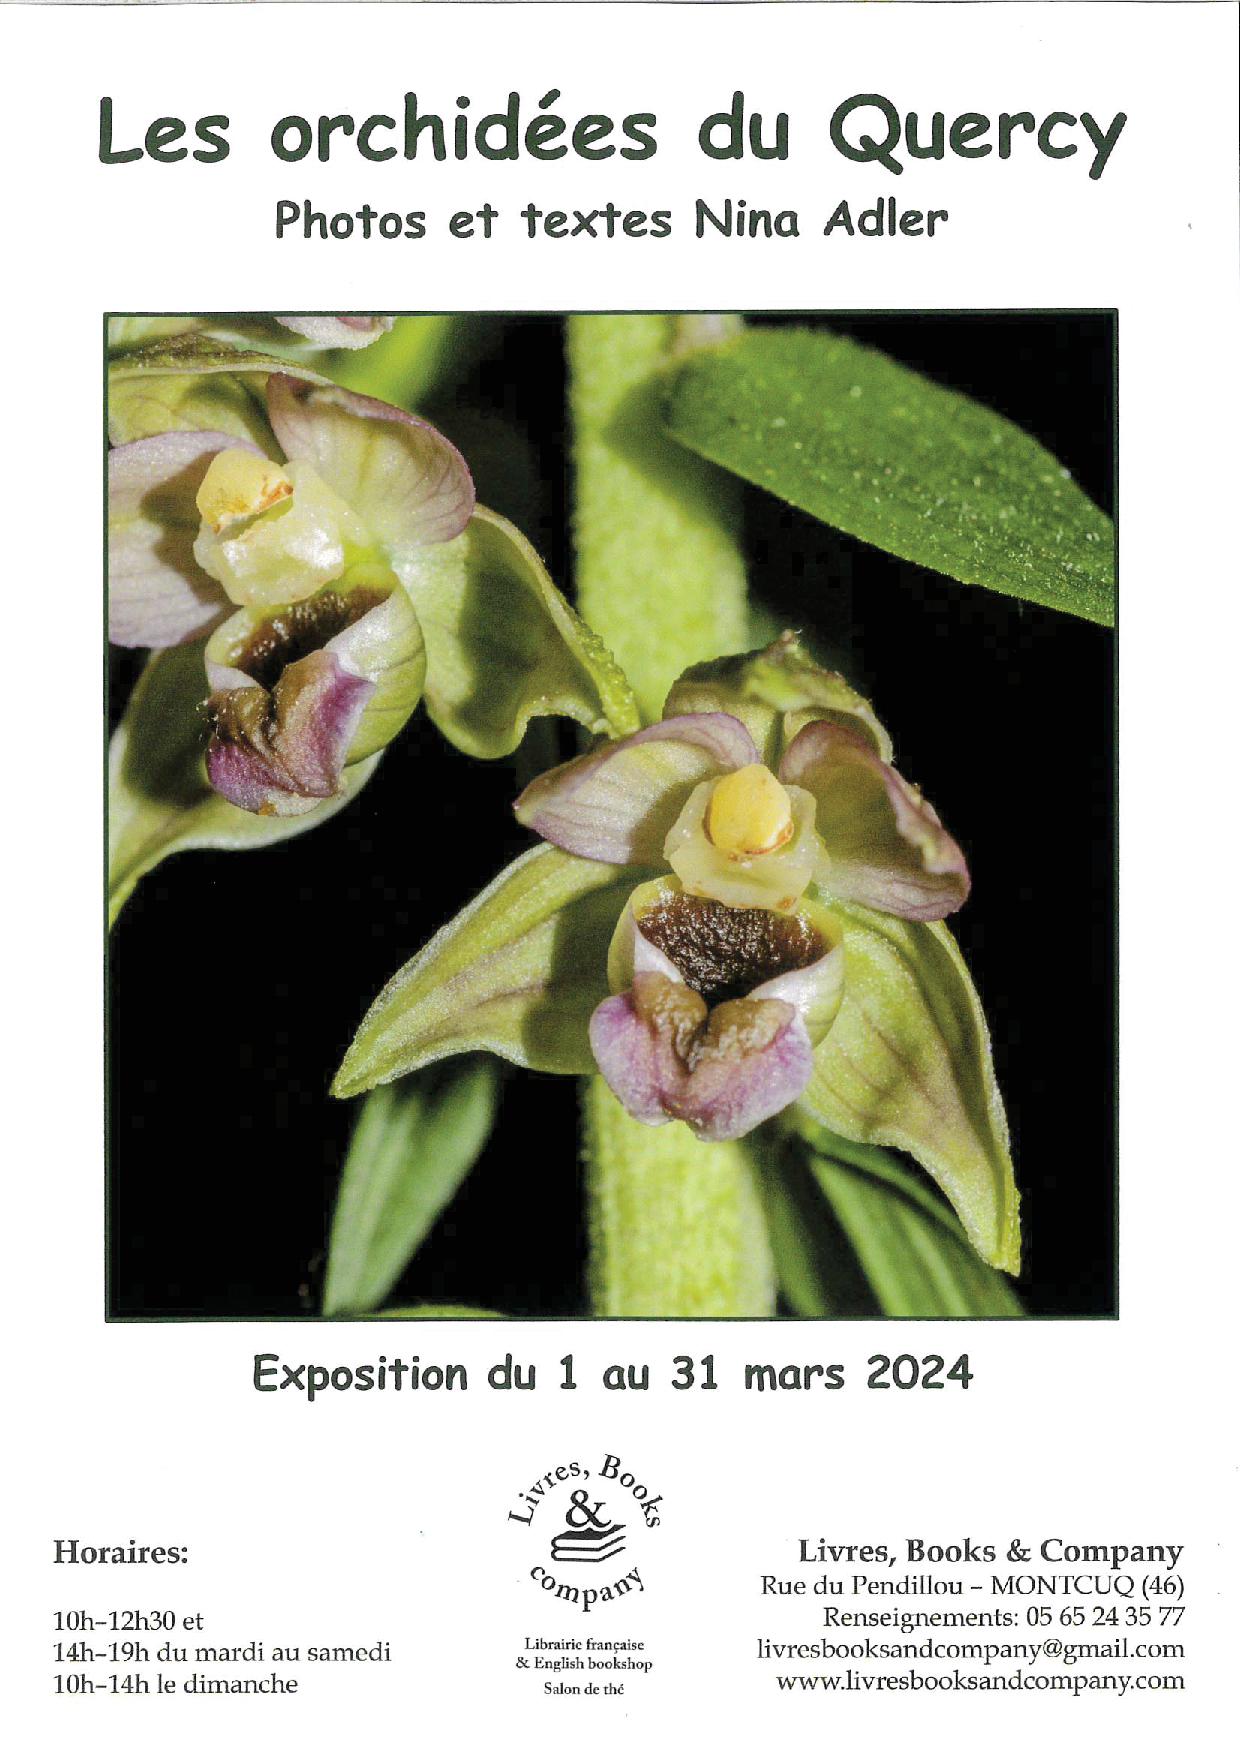 Exposition photographique "Les orchidées du Quercy" chez Livres Books & Co null France null null null null